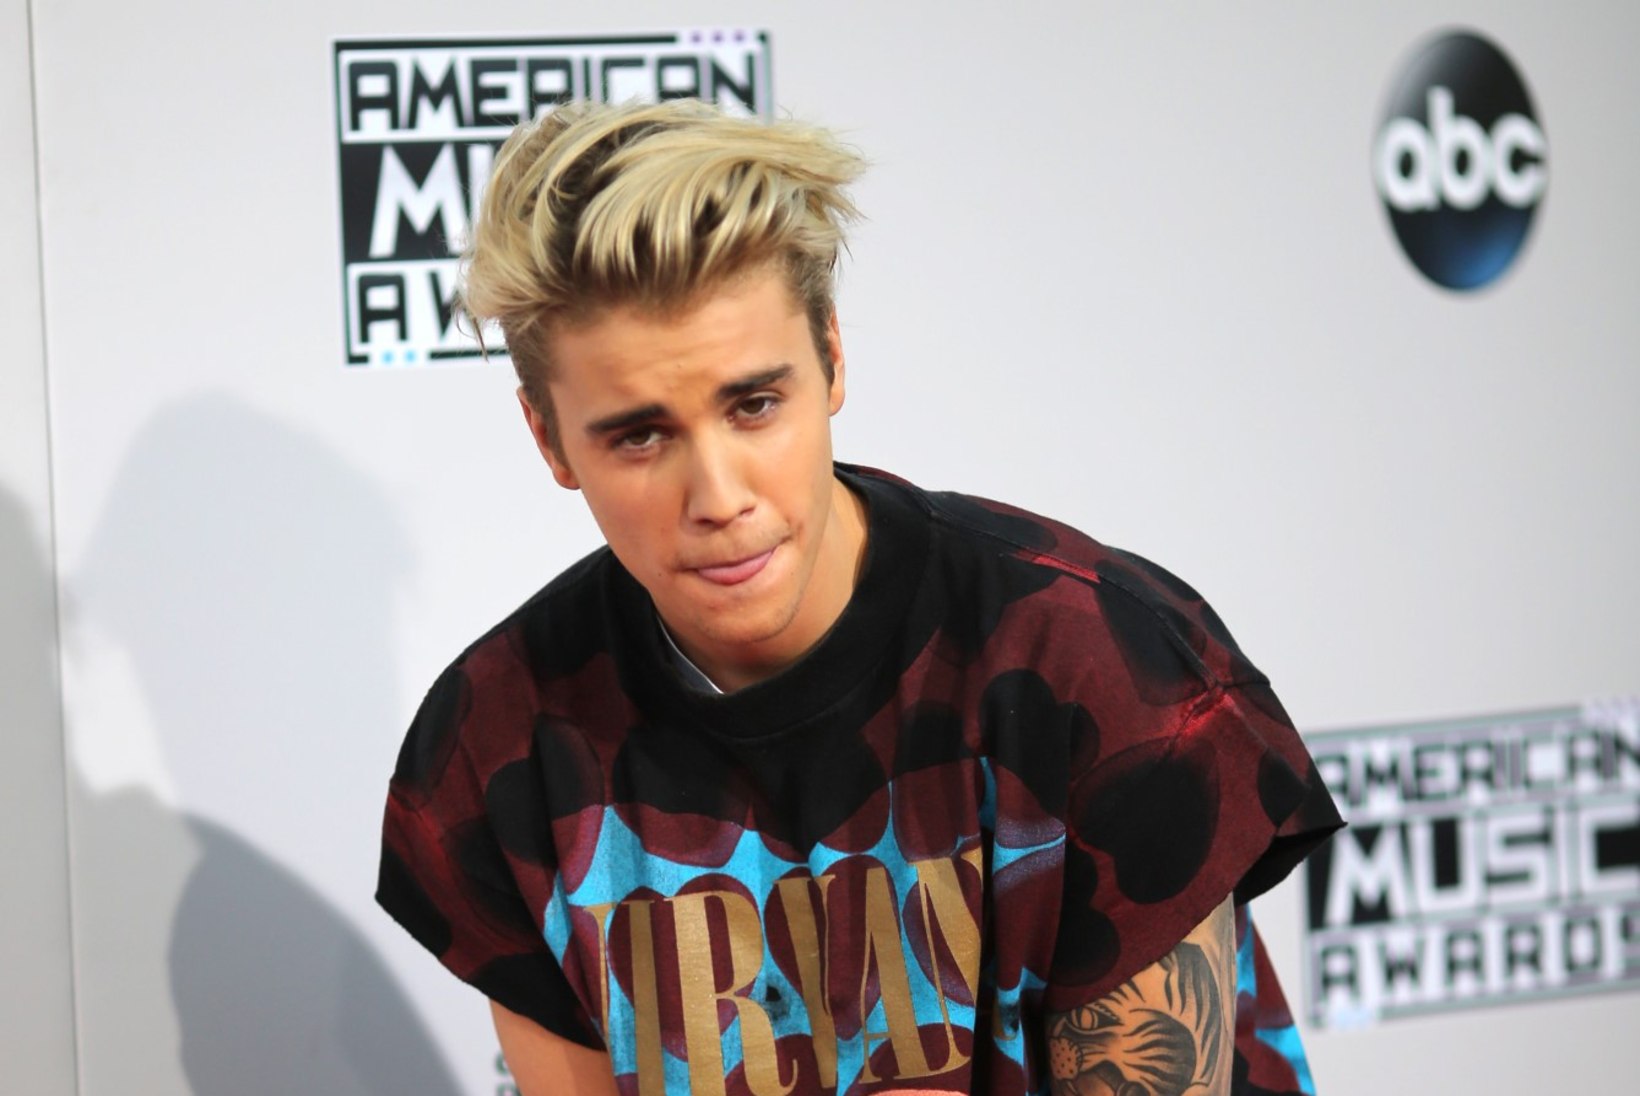 Kas maksaksid 1850 eurot, et teha Justin Bieberiga selfie?